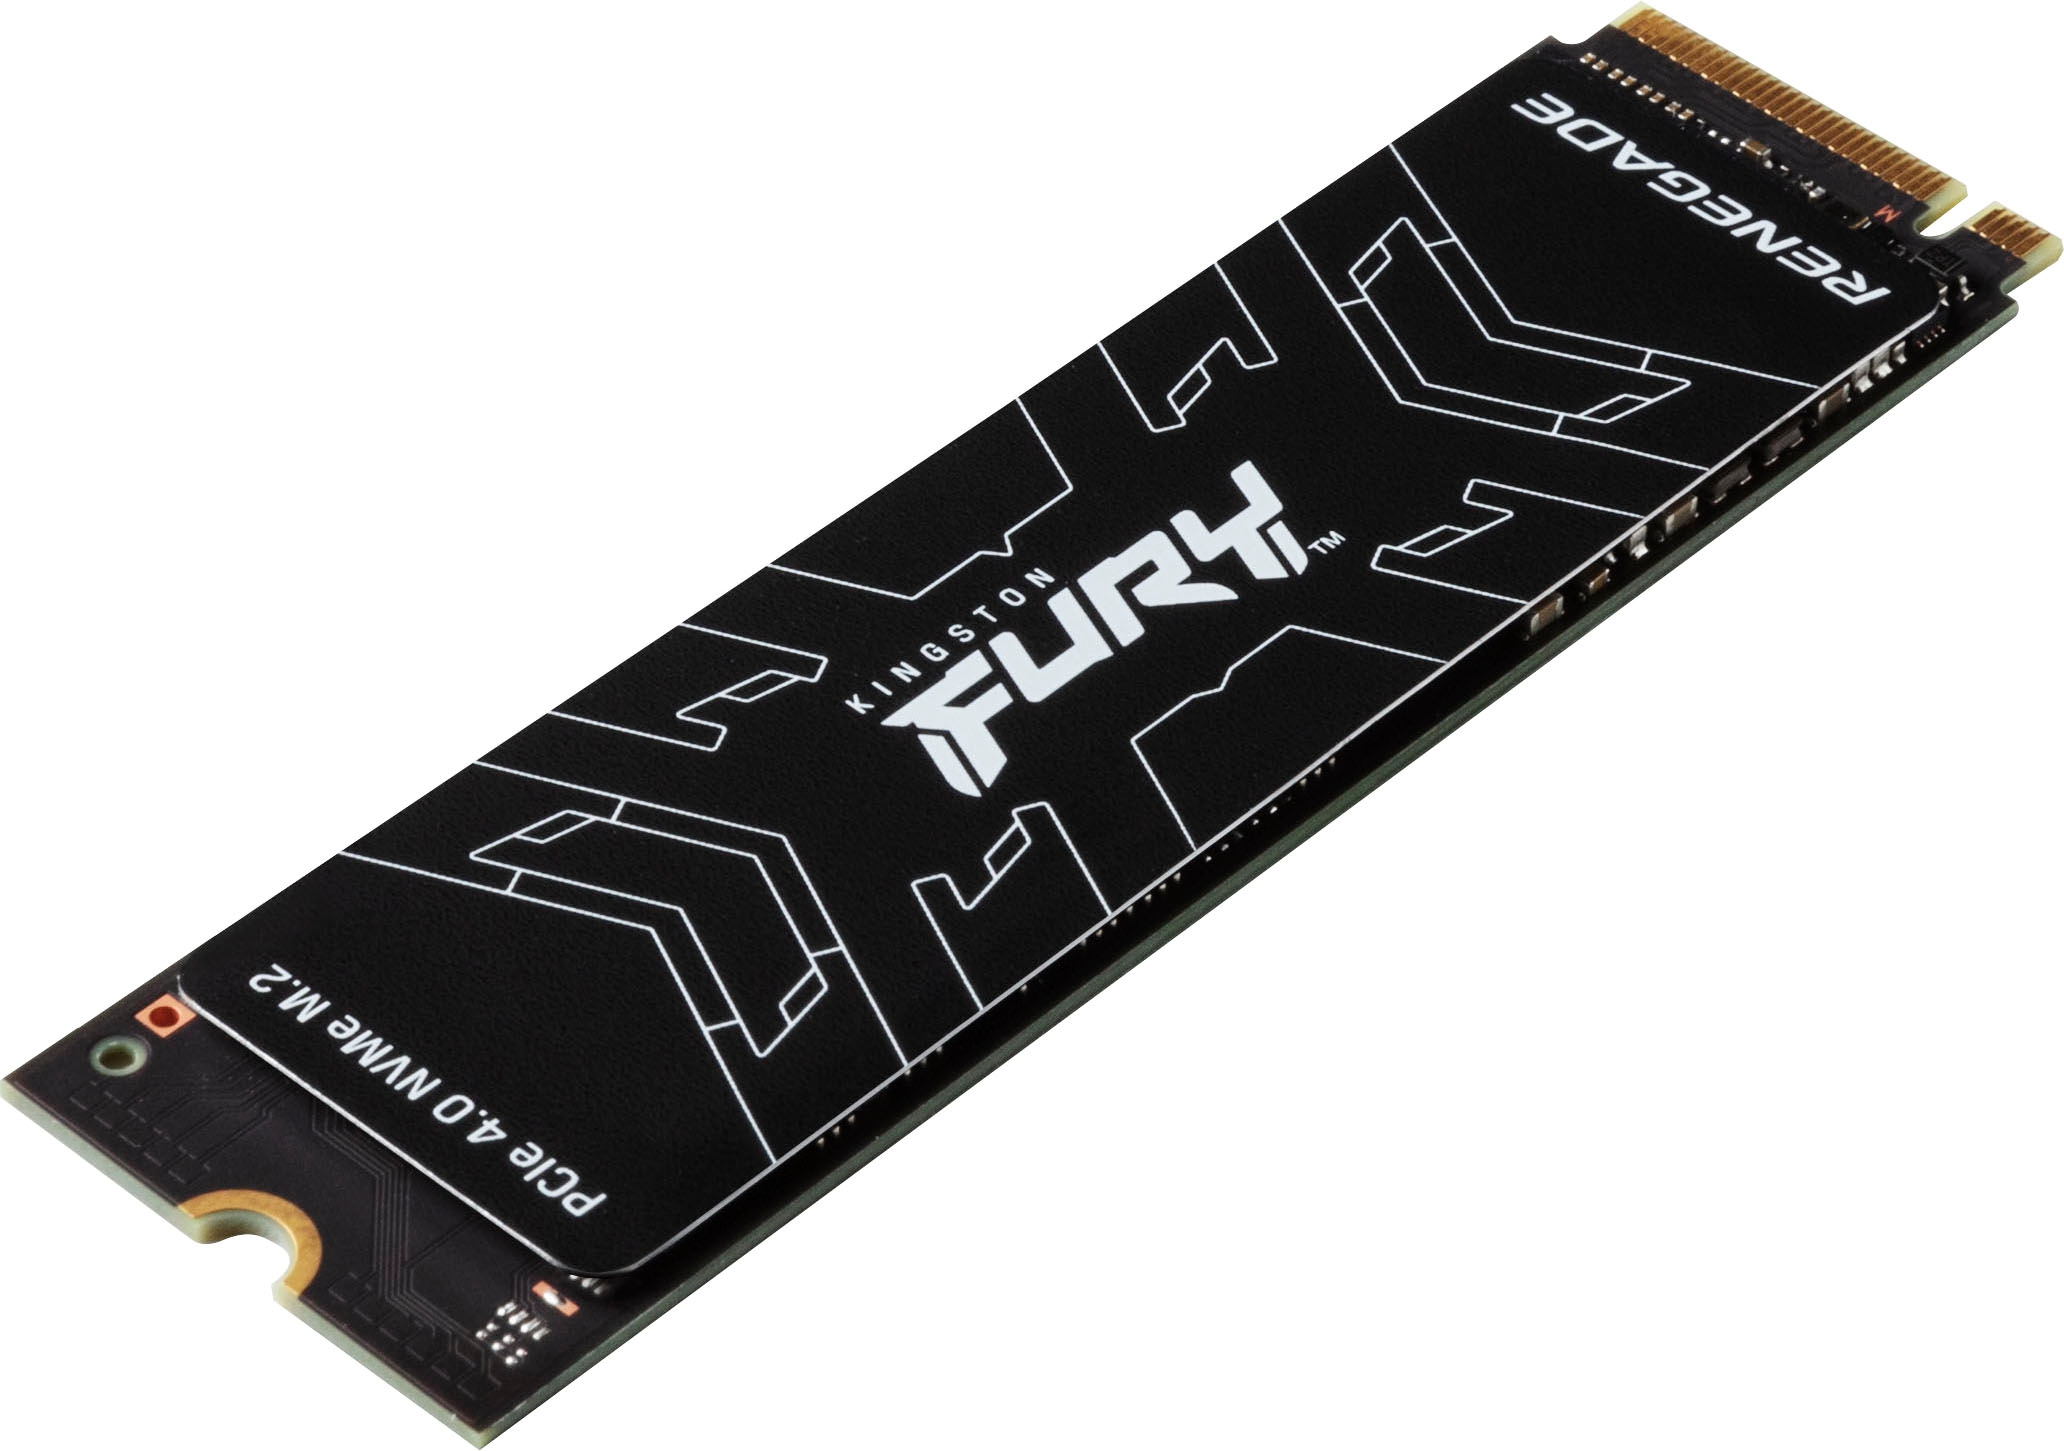 Kingston FURY interne SSD »Renegade PCIe 4.0 NVMe M.2«, Anschluss PCI Express 4.0